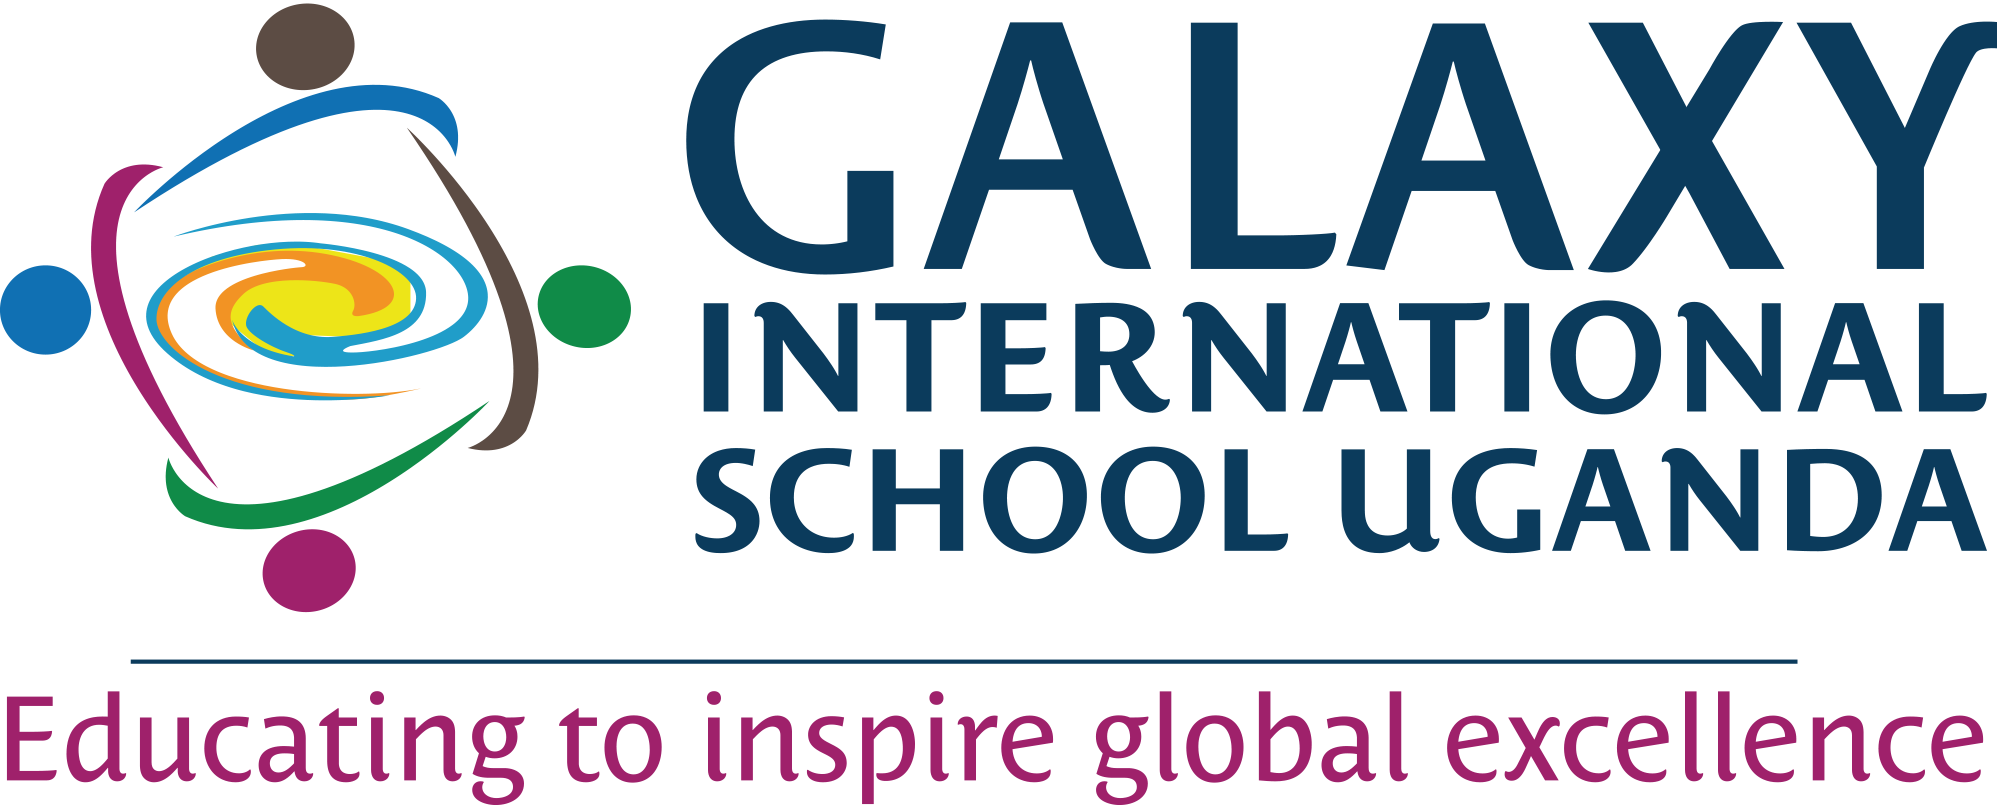 Galaxy International School Uganda Jobs